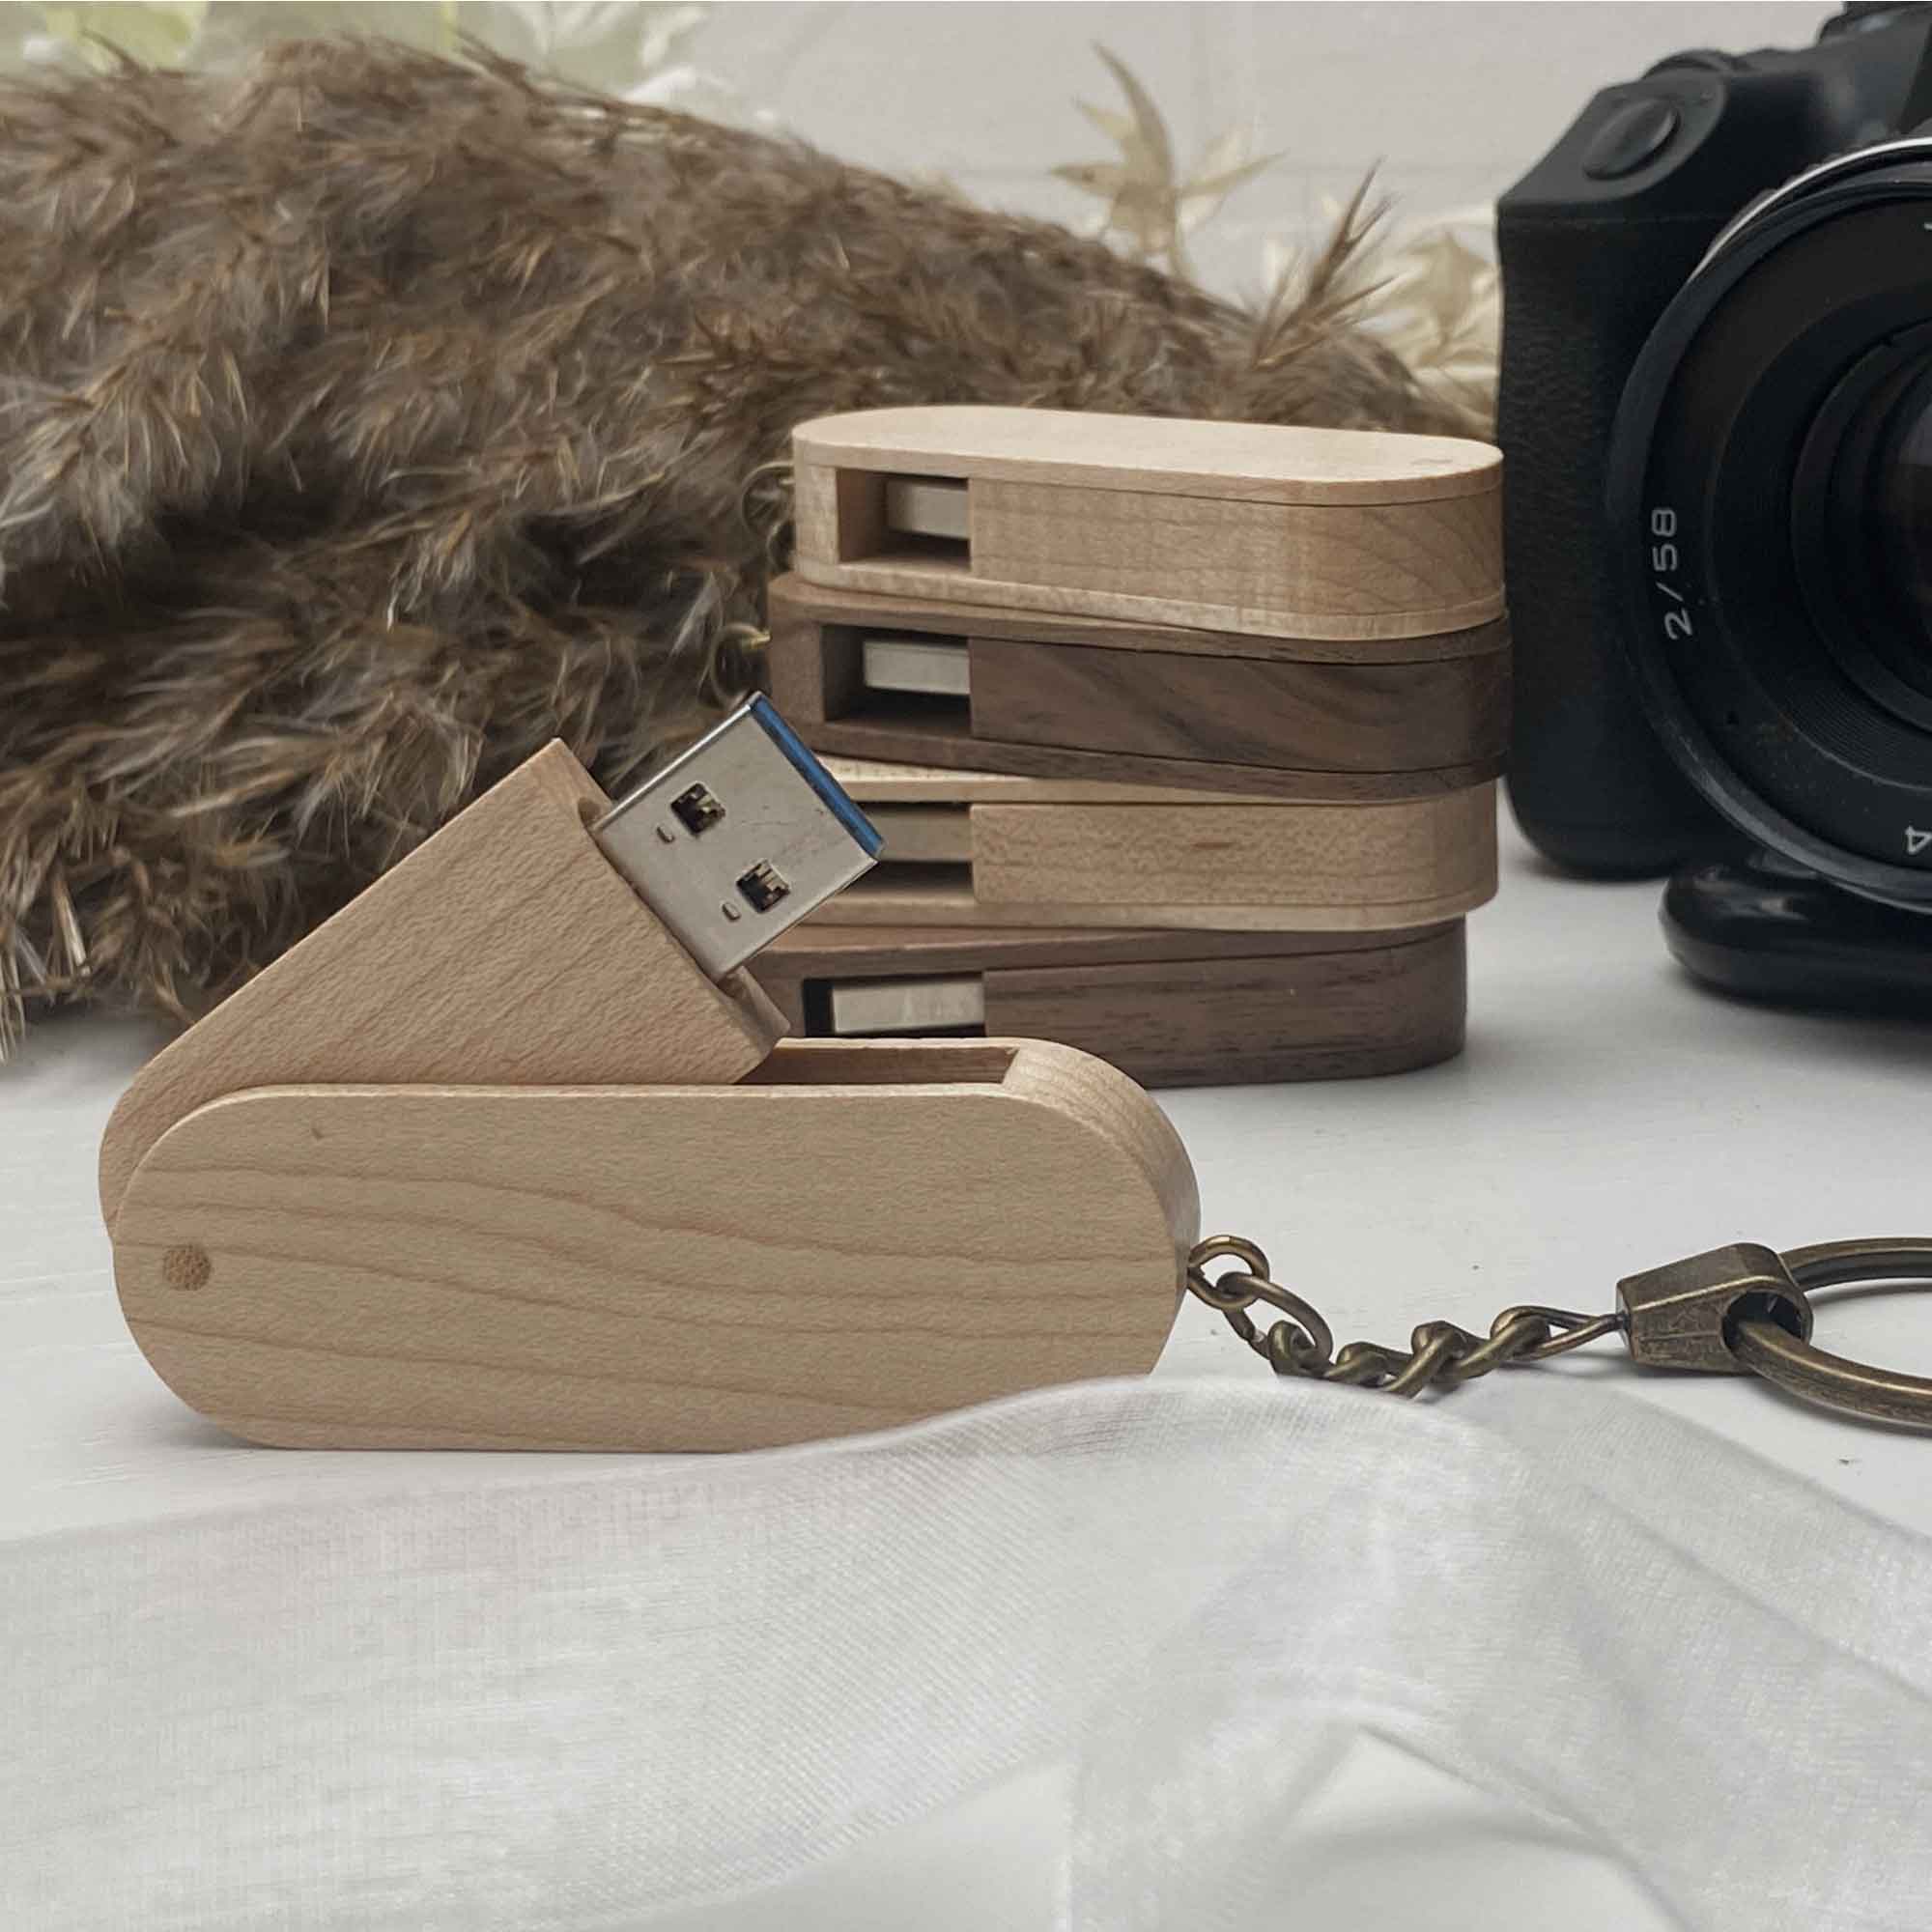 Wood USB flash drive key ring Personal engraving